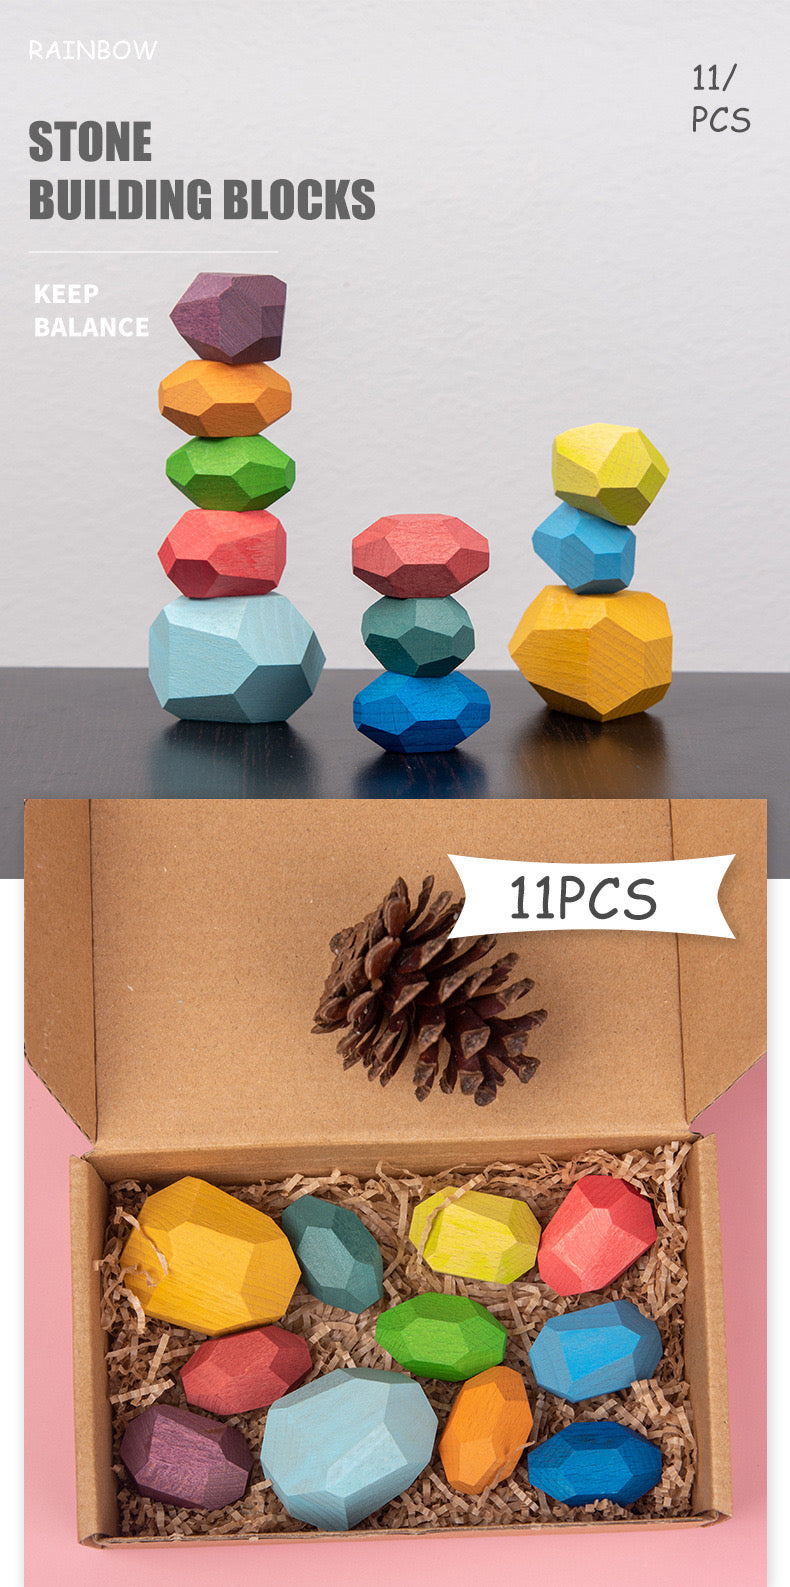 Children's Toy Stone Building Blocks - Keep Balance